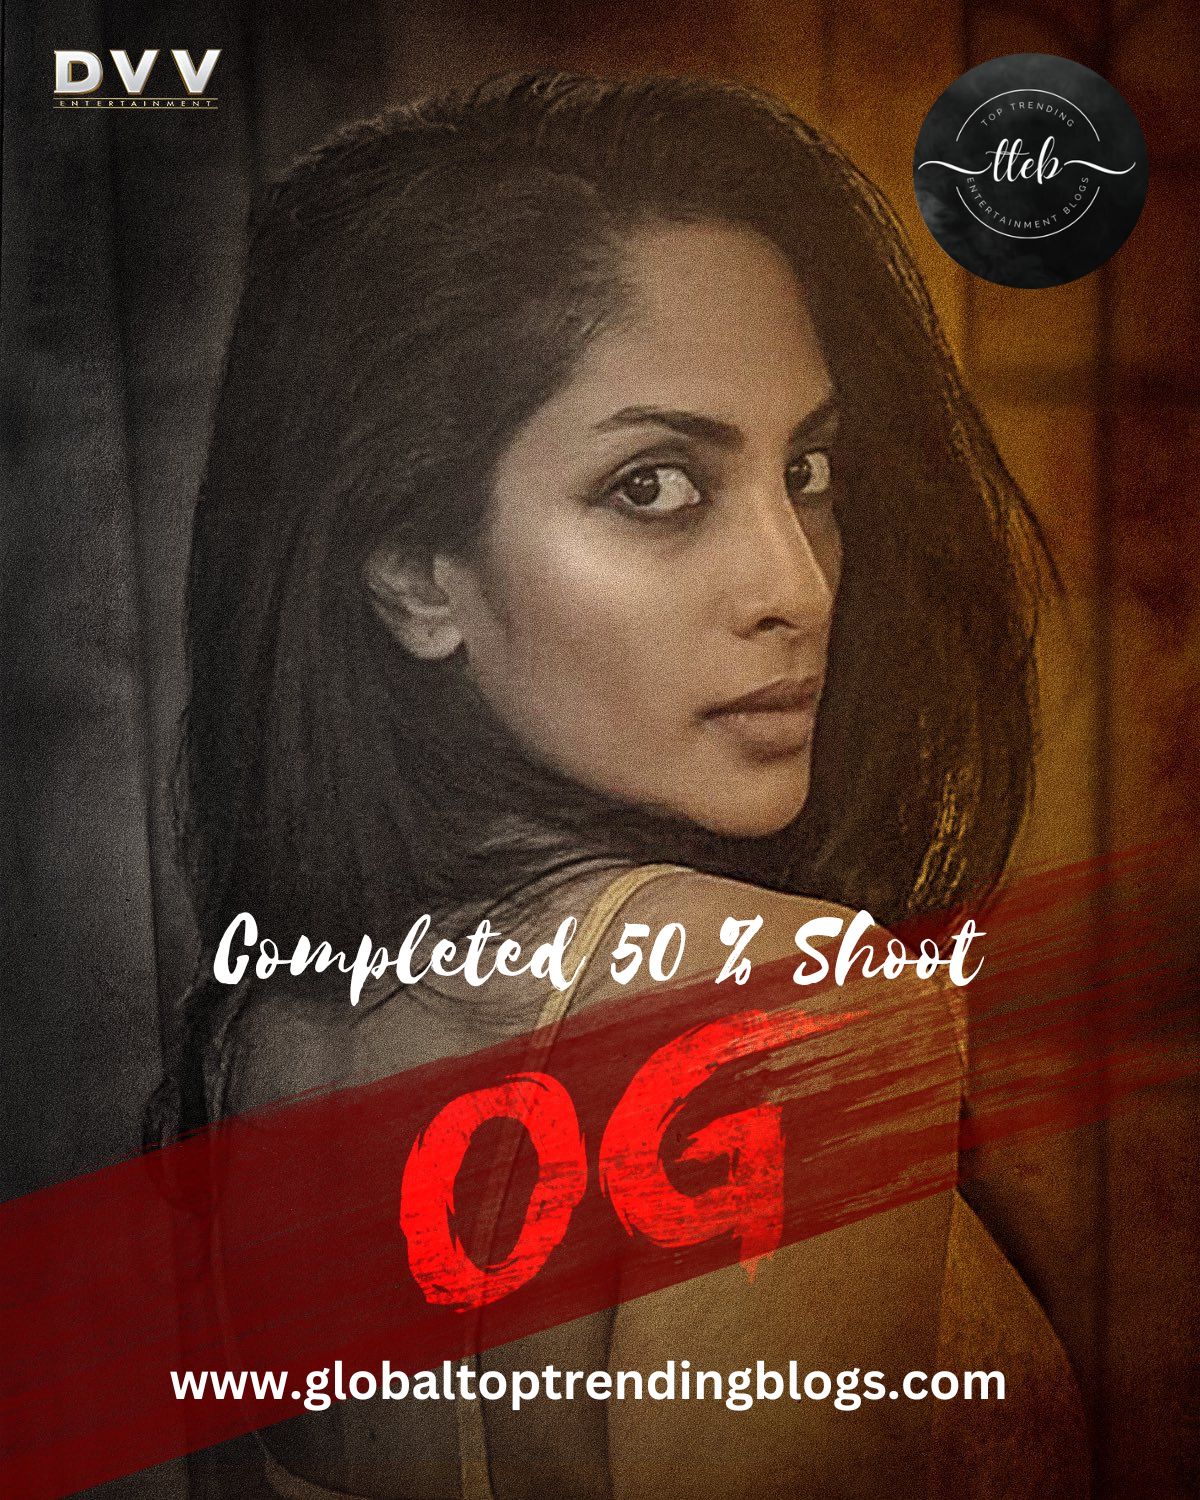 Pawan Kalyan & Emraan Hashmi Completed 50 % Shoot of OG